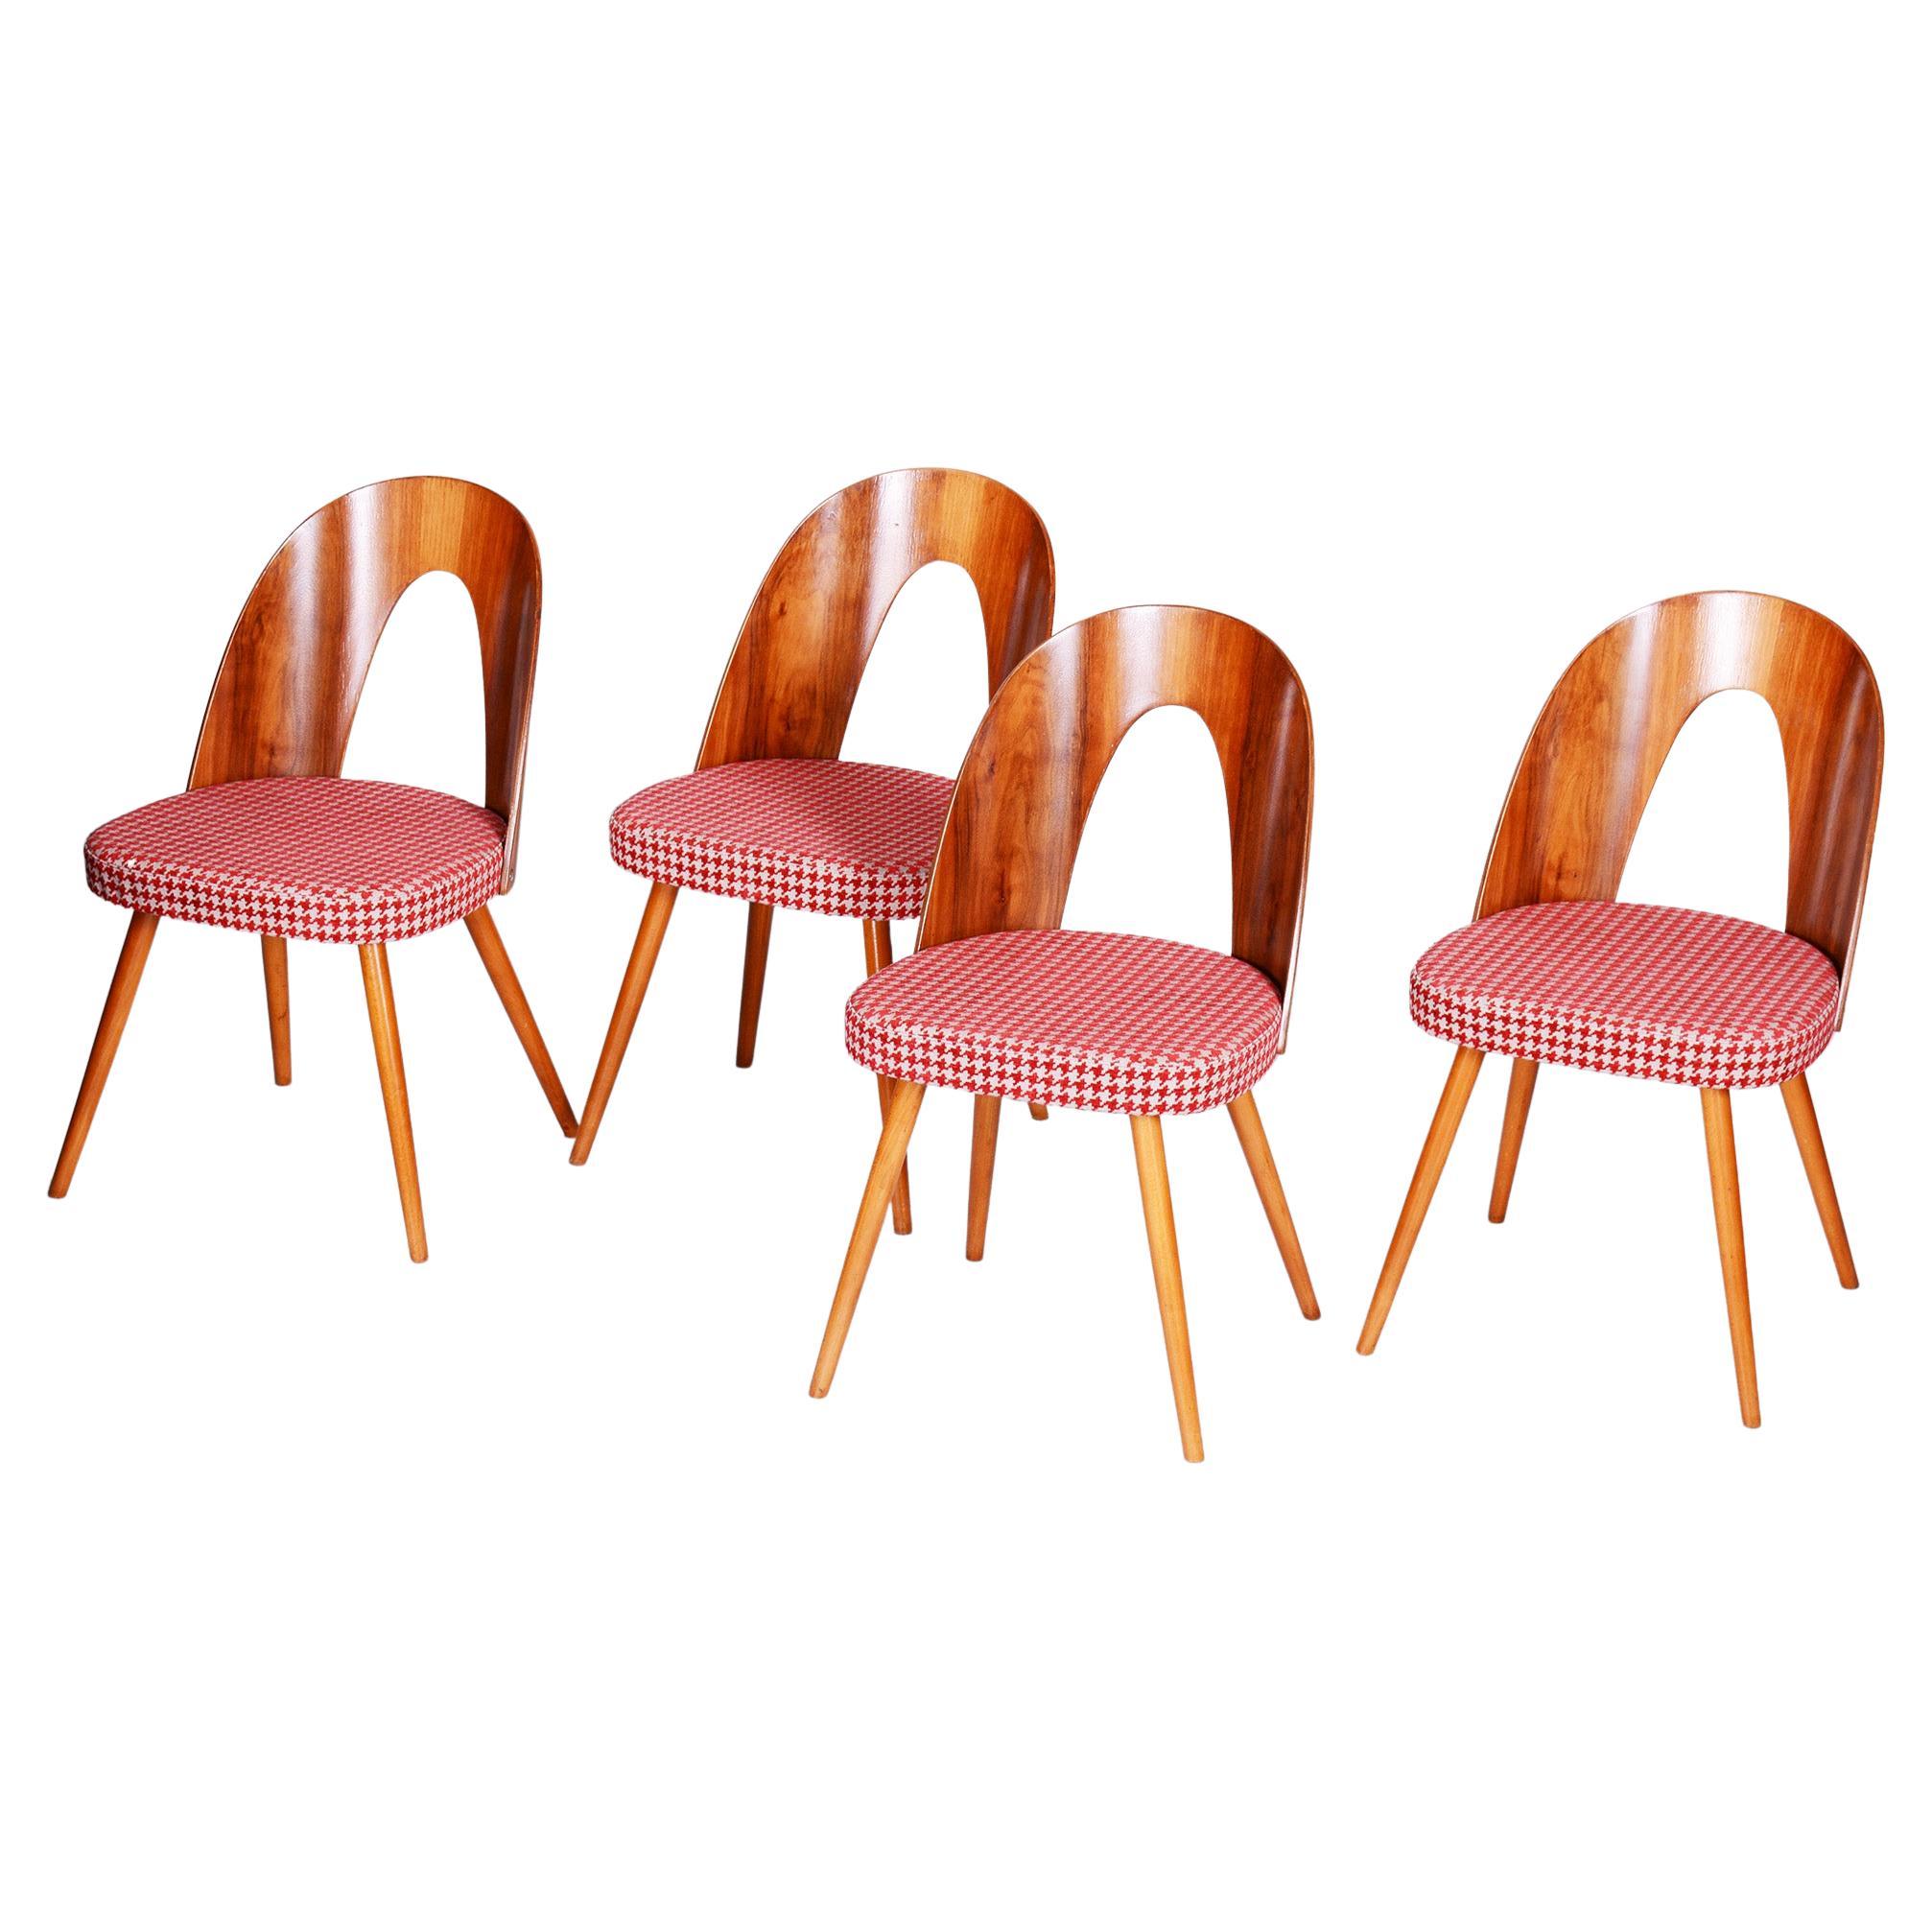 Four Restored Midcentury Chairs, Antonin Suman, Beech, Walnut, Czechia, 1950s For Sale